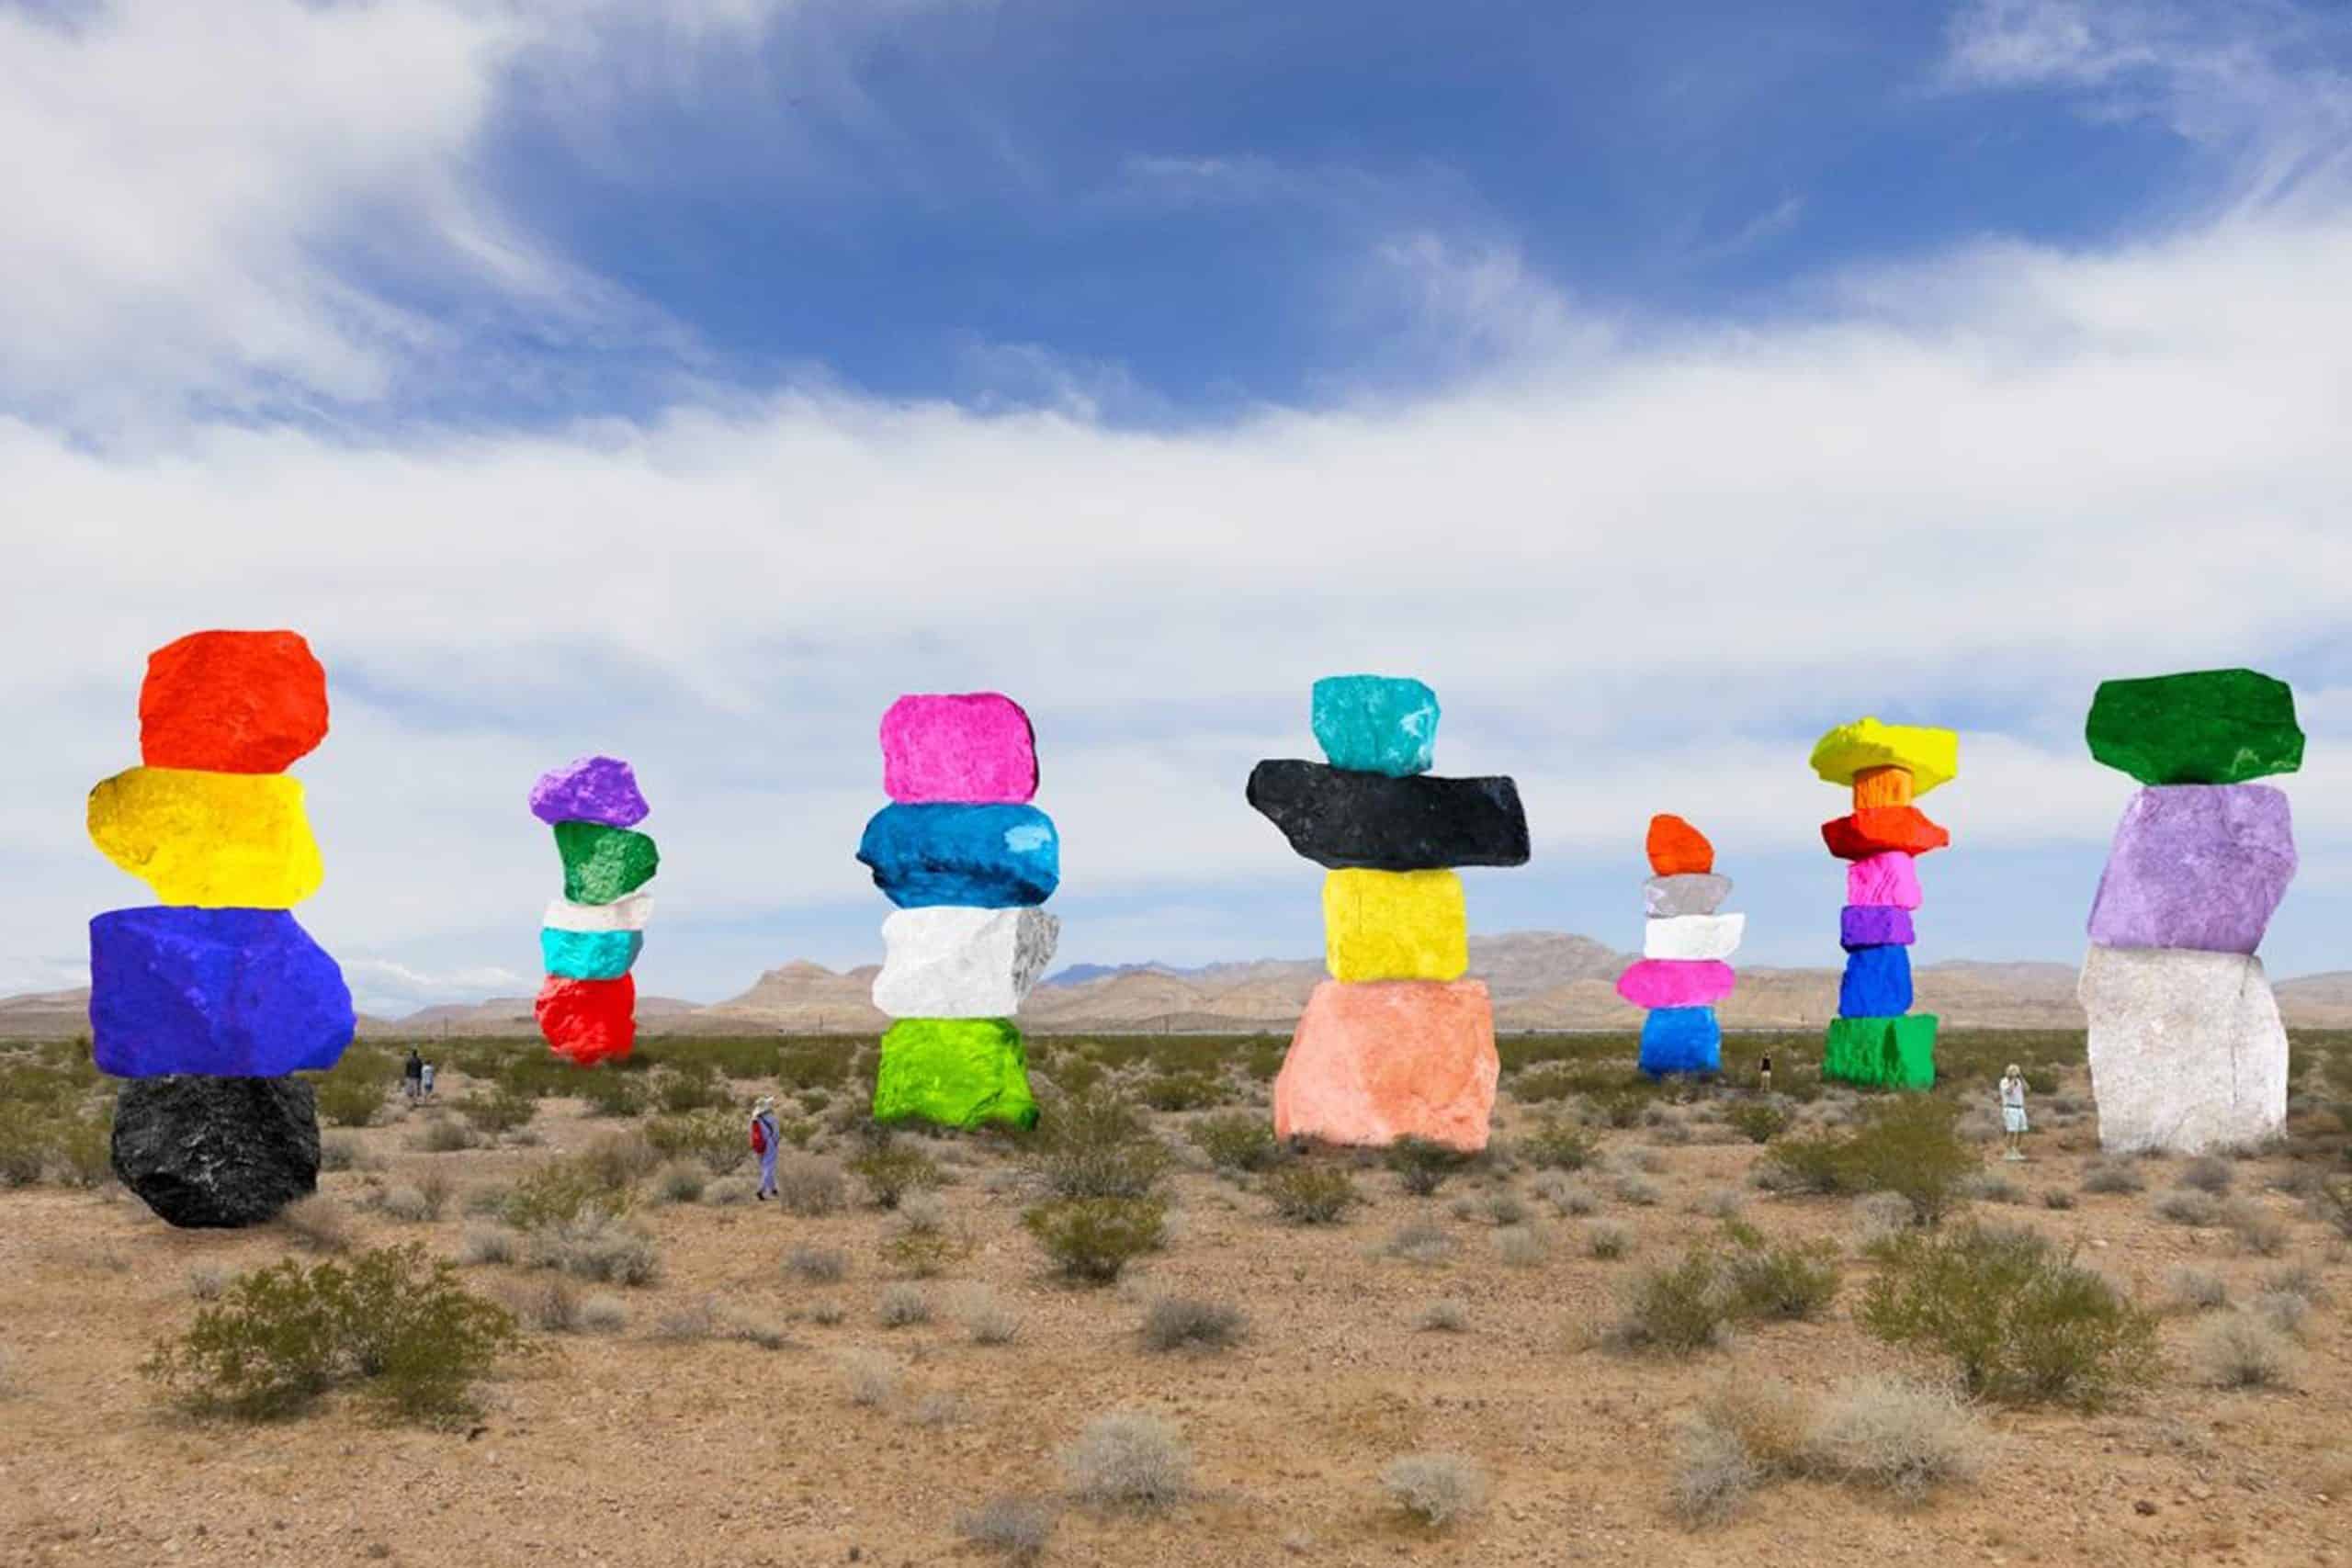 Ugo Rondinone’s Magic Mountains Bring Color to the Nevada Desert